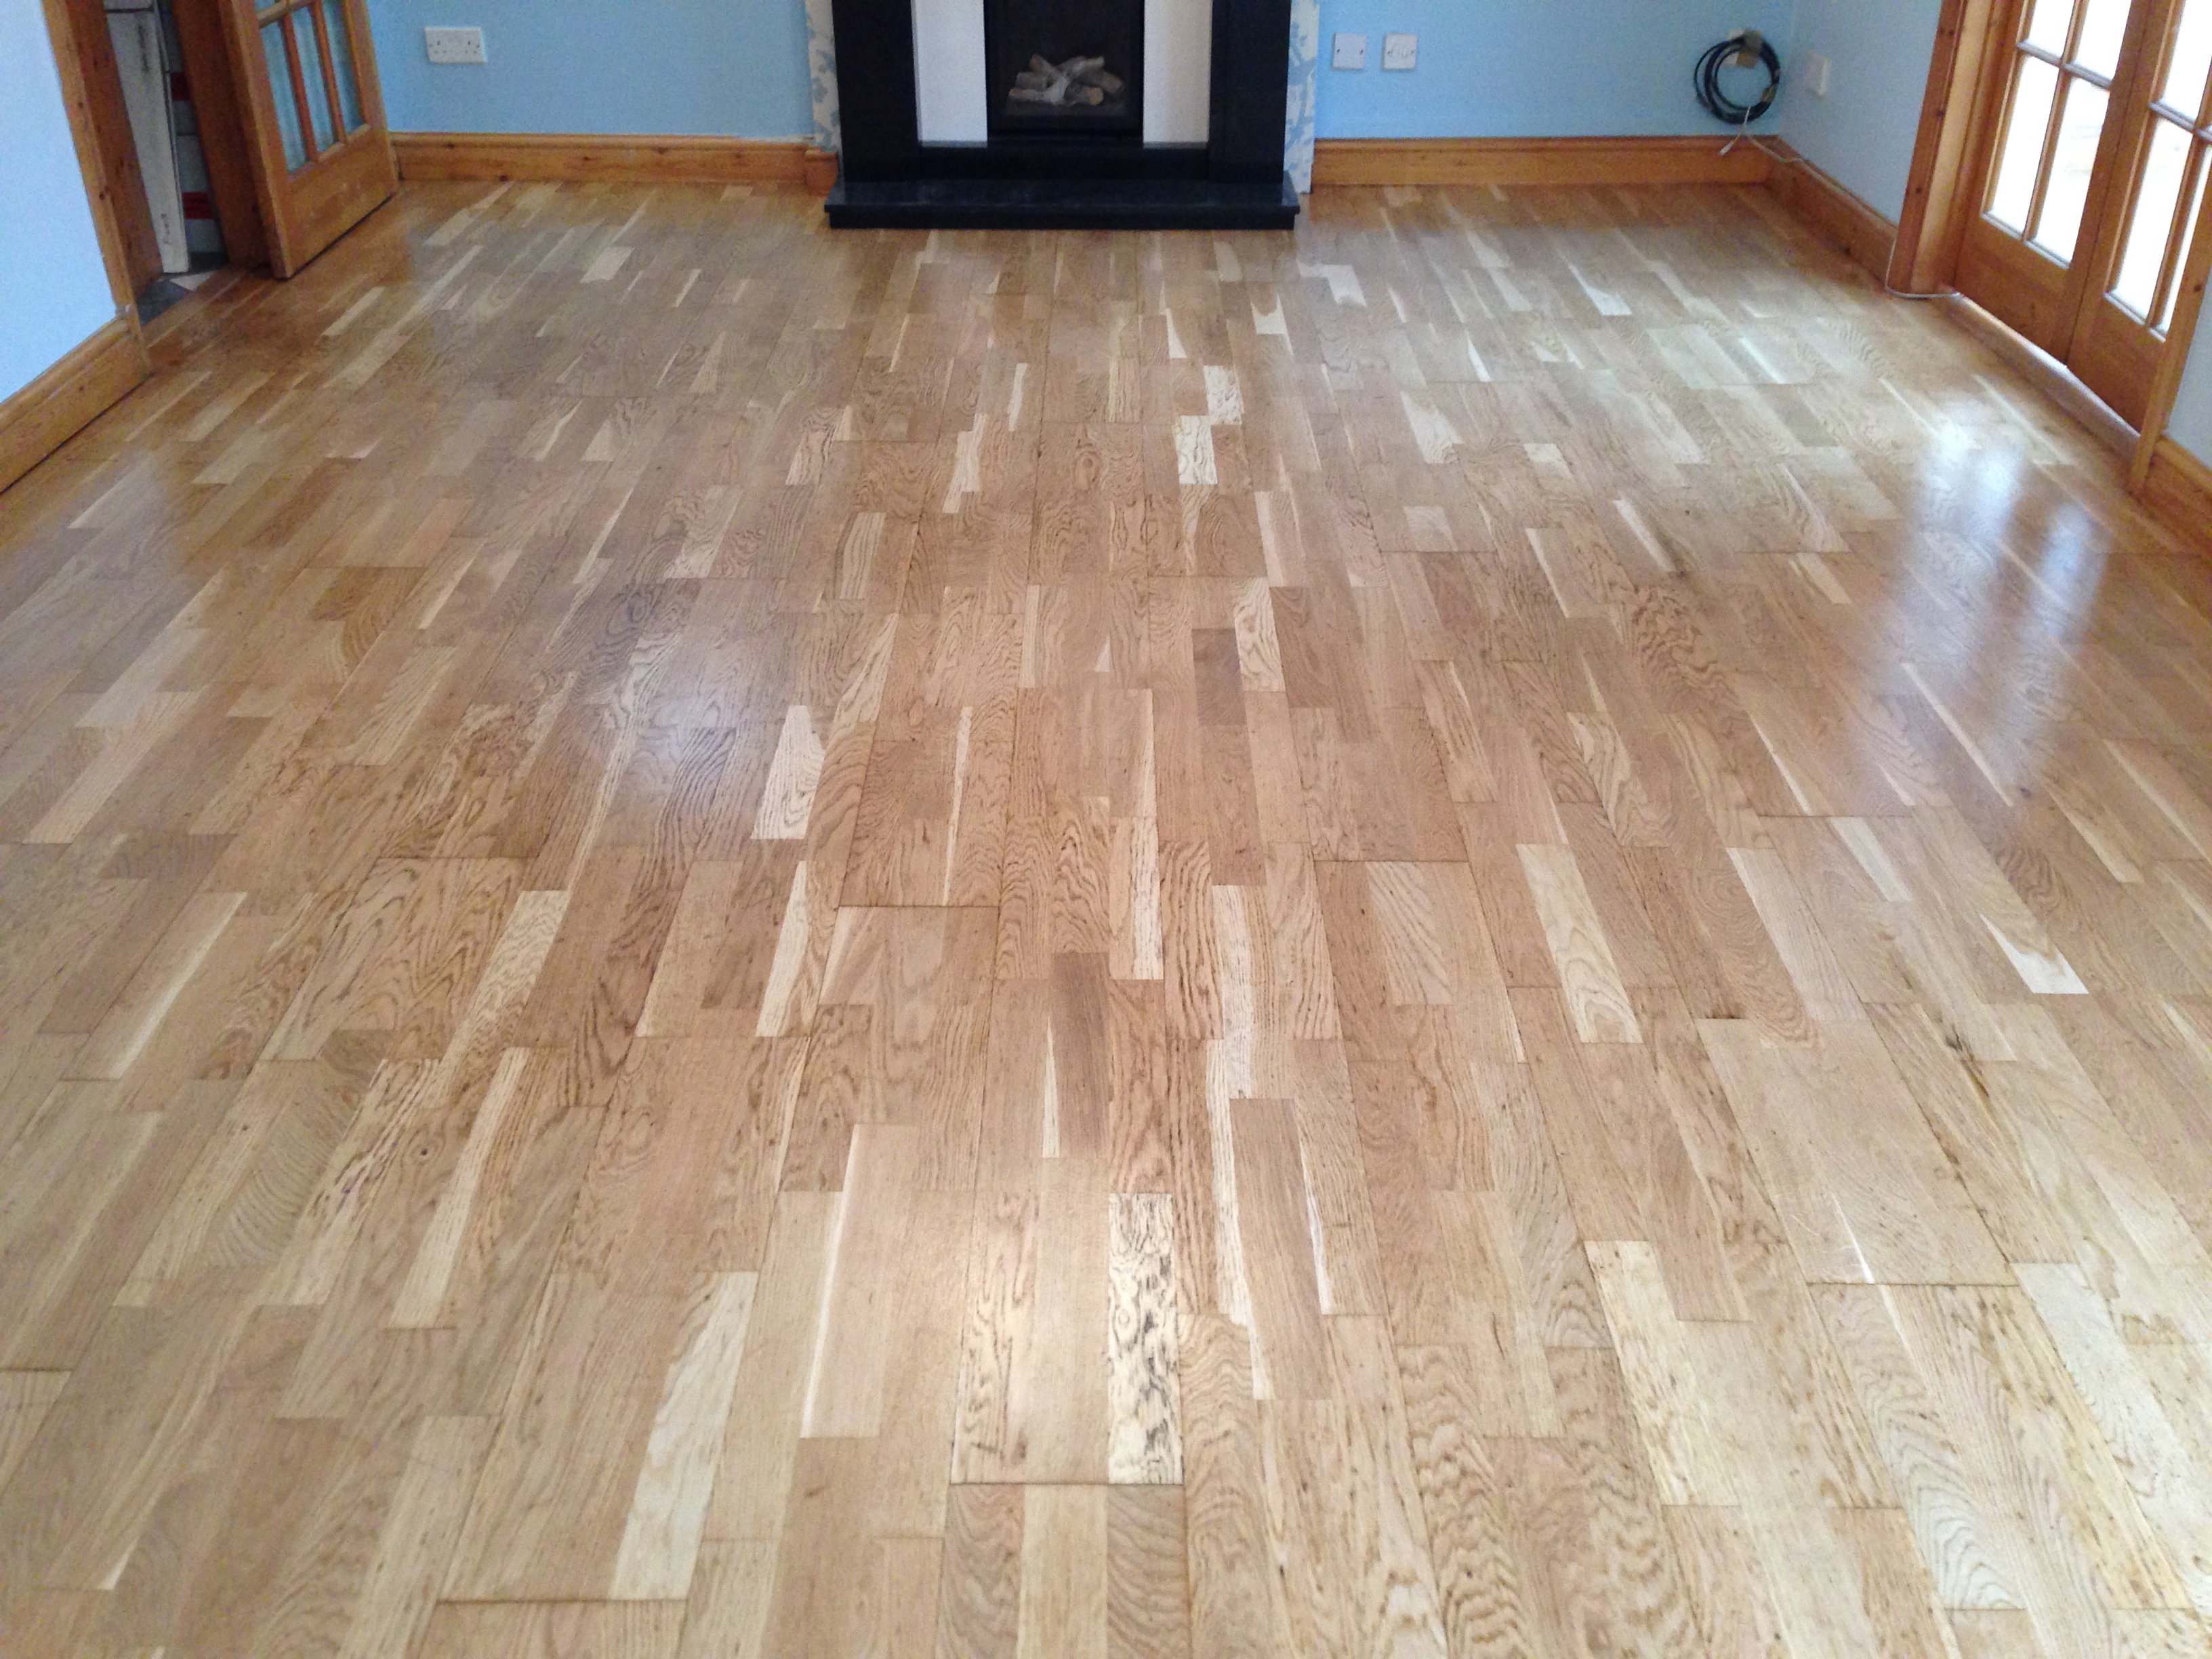 Laminate Wood Floor Restoration The, Can You Sand Laminate Flooring